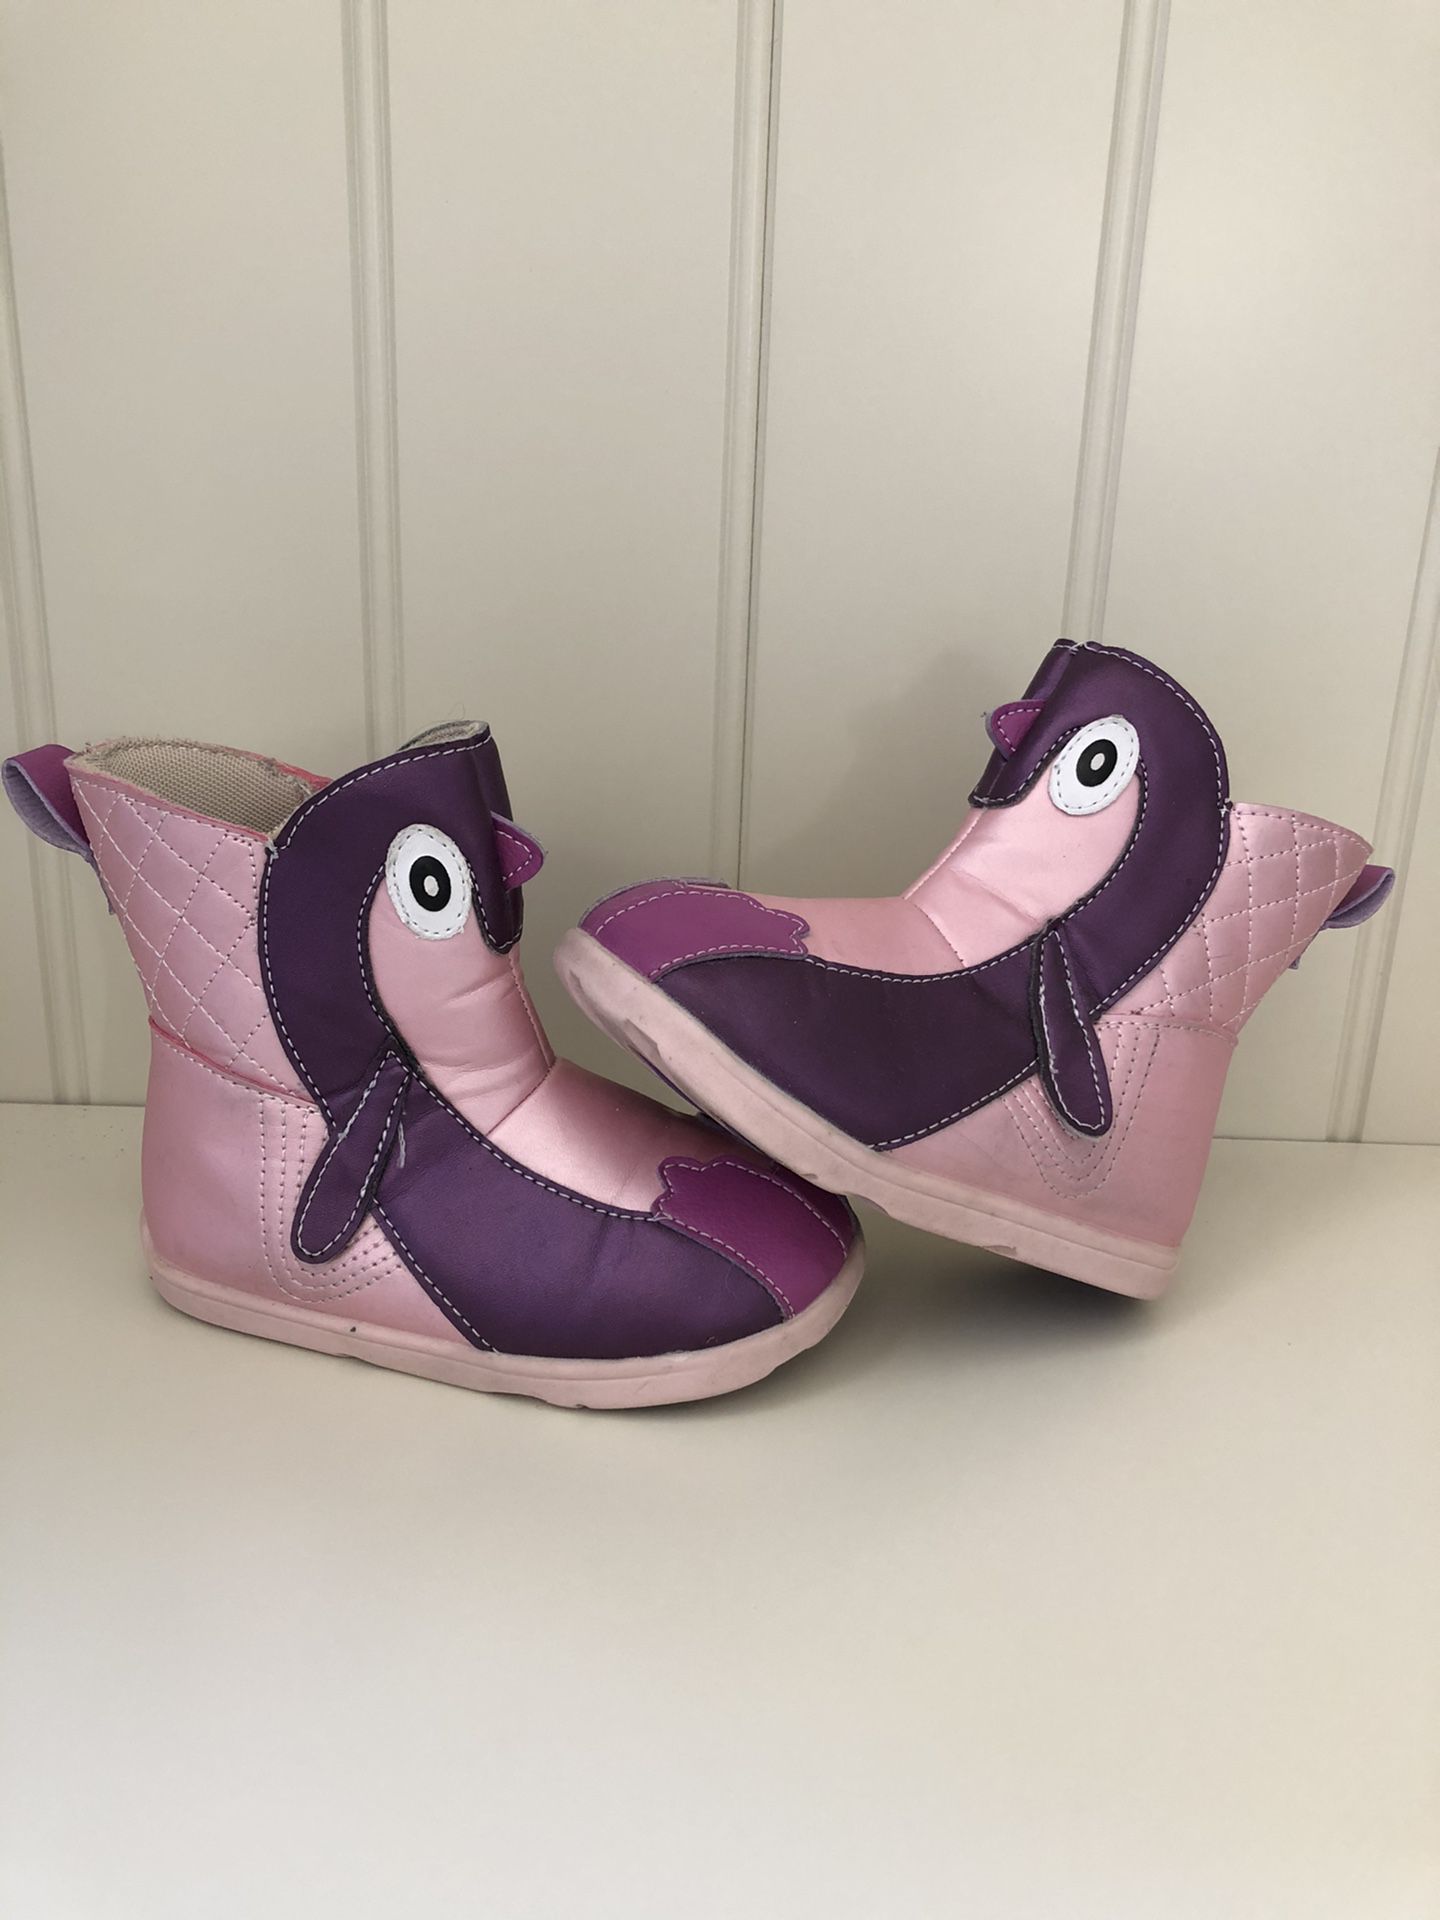 Girls zooligans Pink Purple Metallic Penguin Boots Size 10